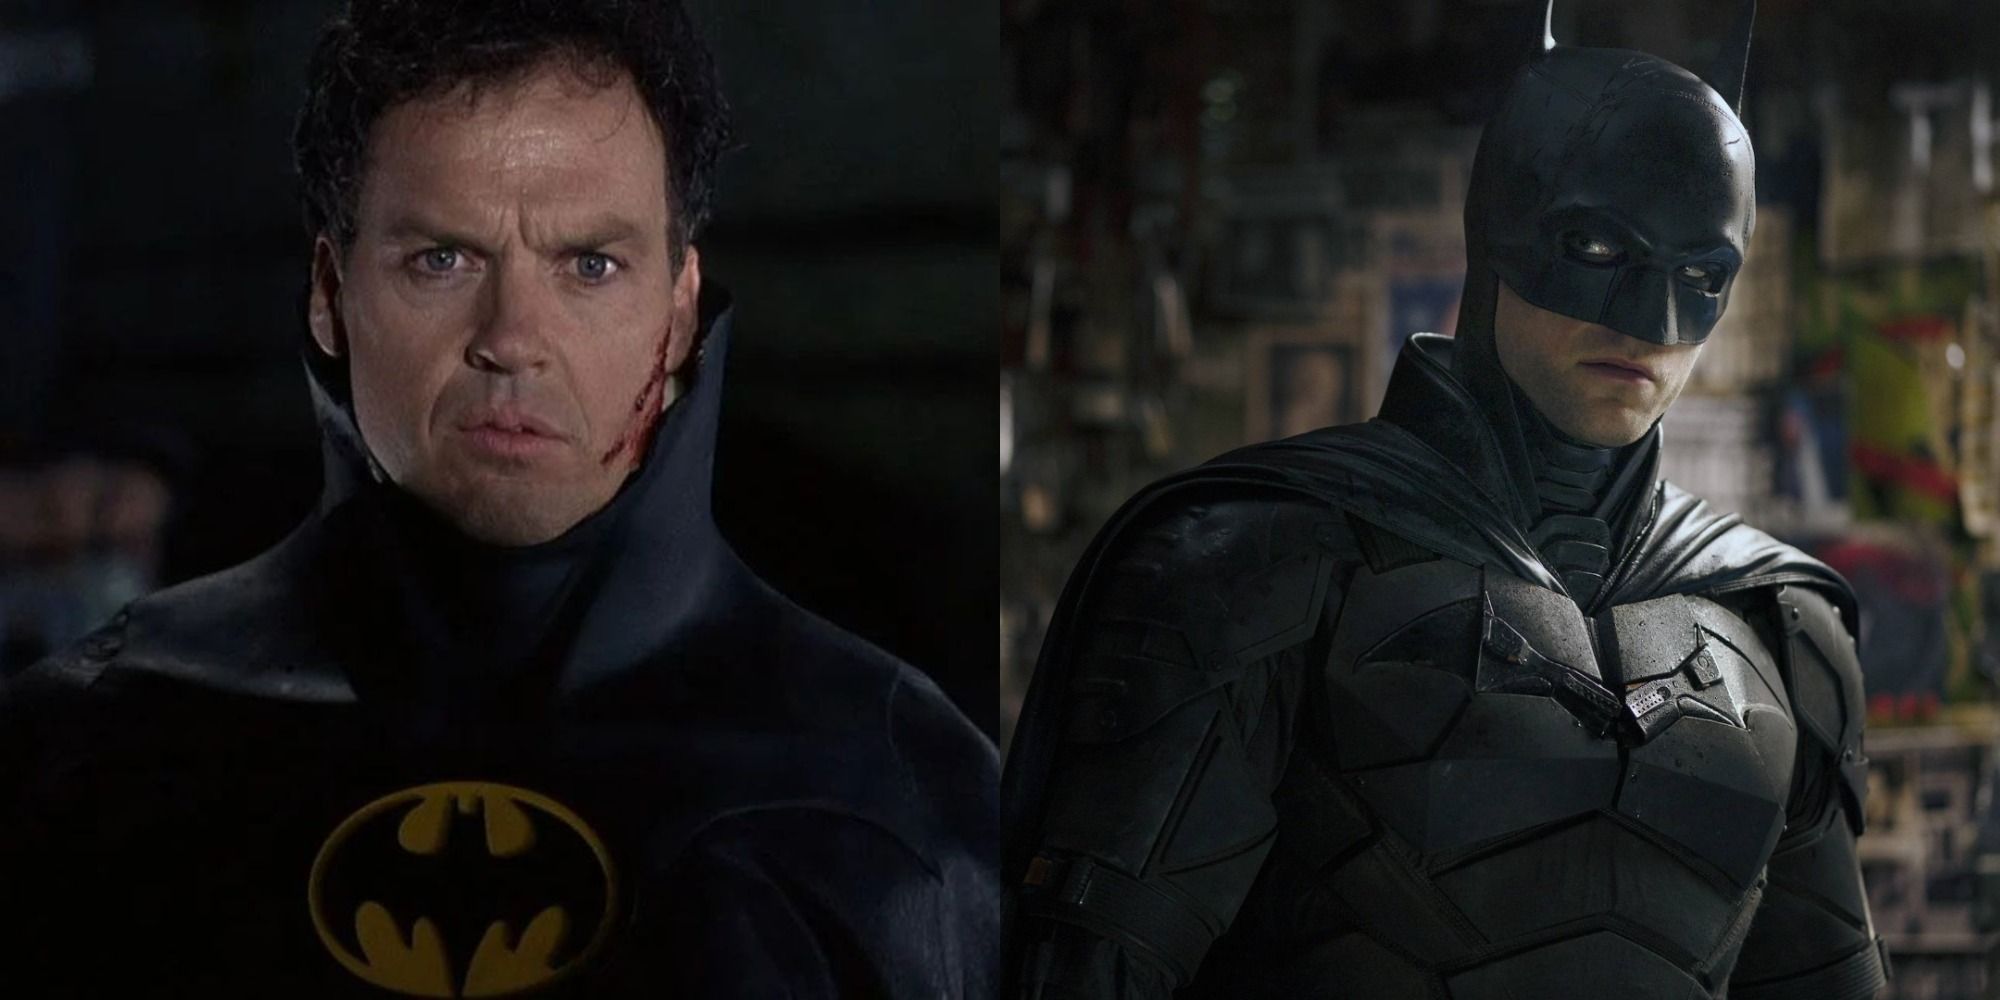 Batman even has a Bat-emblem on his Bat-underwear